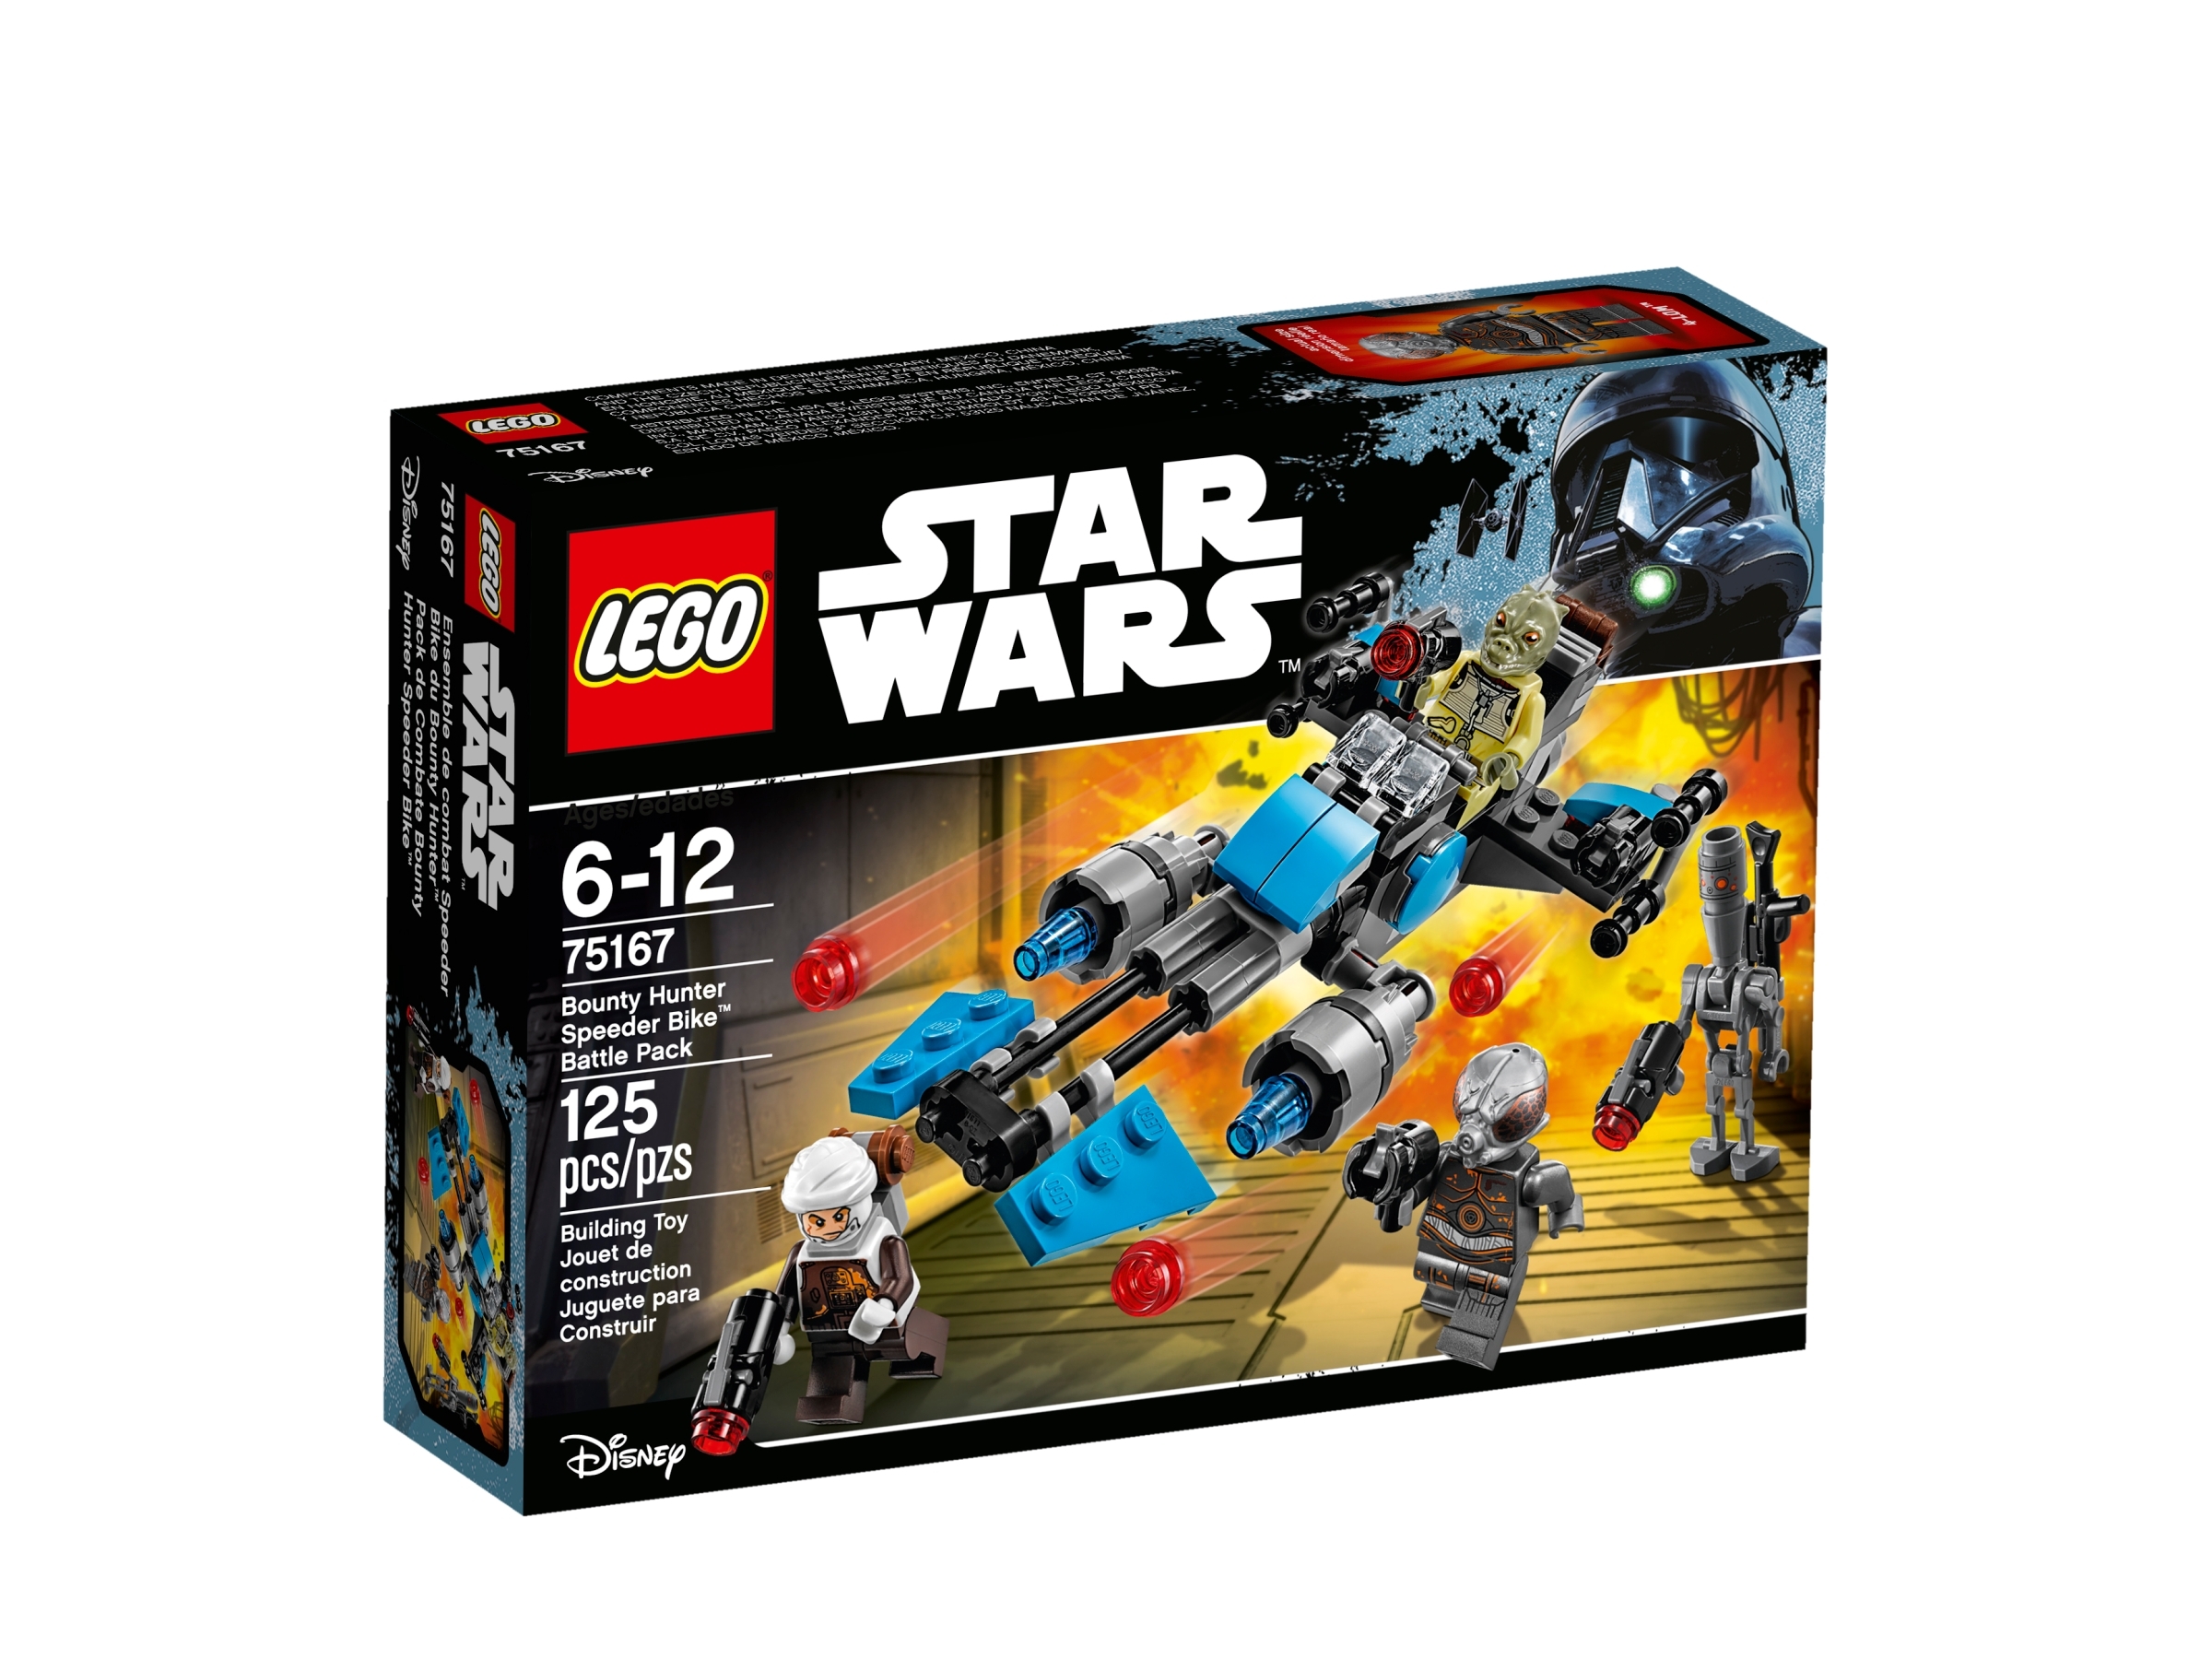 NEW LEGO STAR WARS DENGAR MINIFIGURE FIGURE 75167 BOUNTY HUNTER & BLASTER 